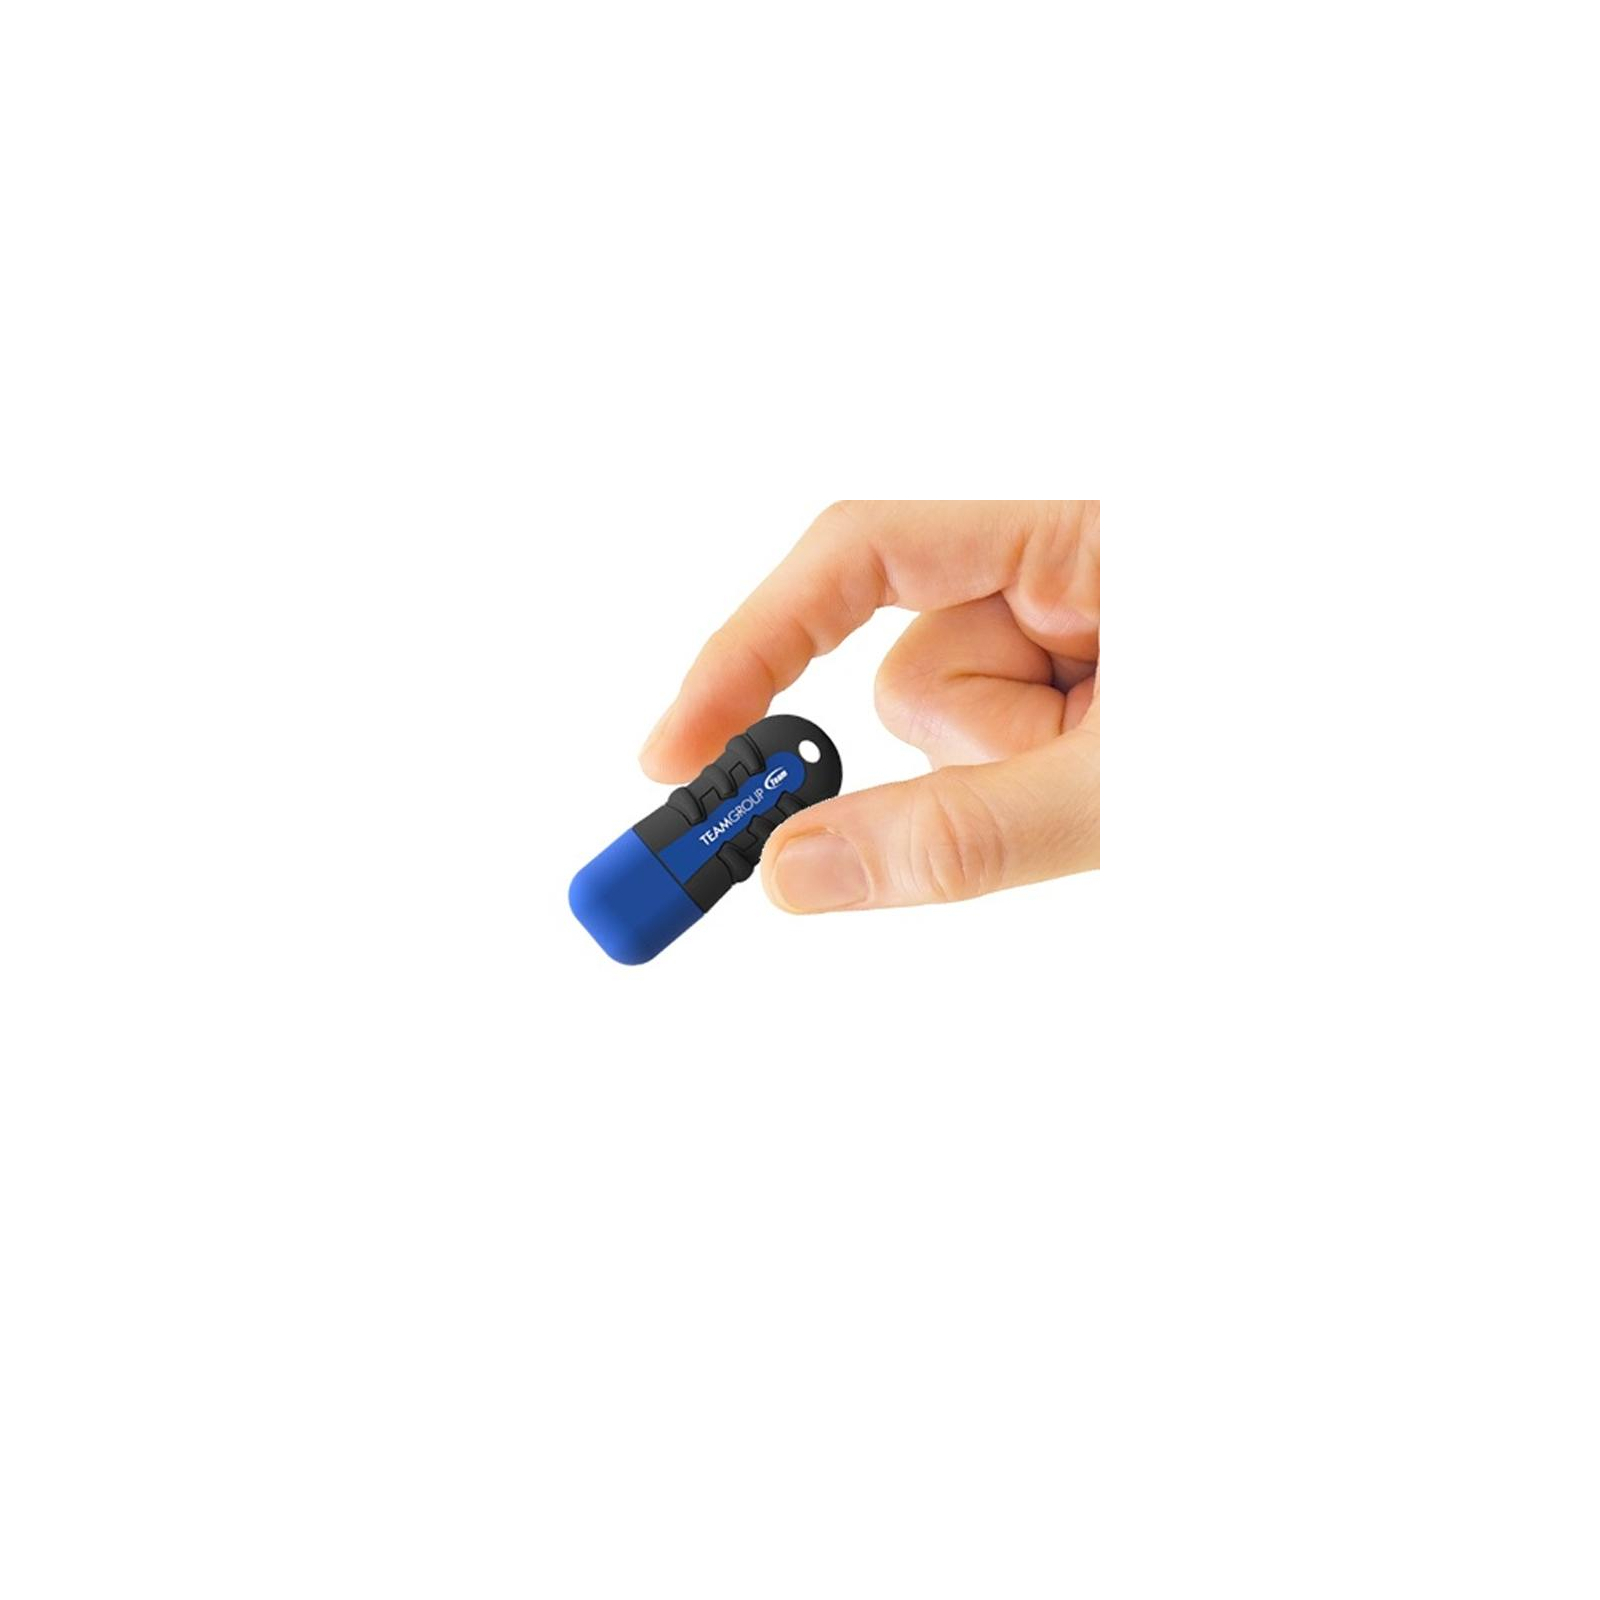 USB флеш накопитель Team 8GB T181 Blue USB 2.0 (TT1818GC01) изображение 4